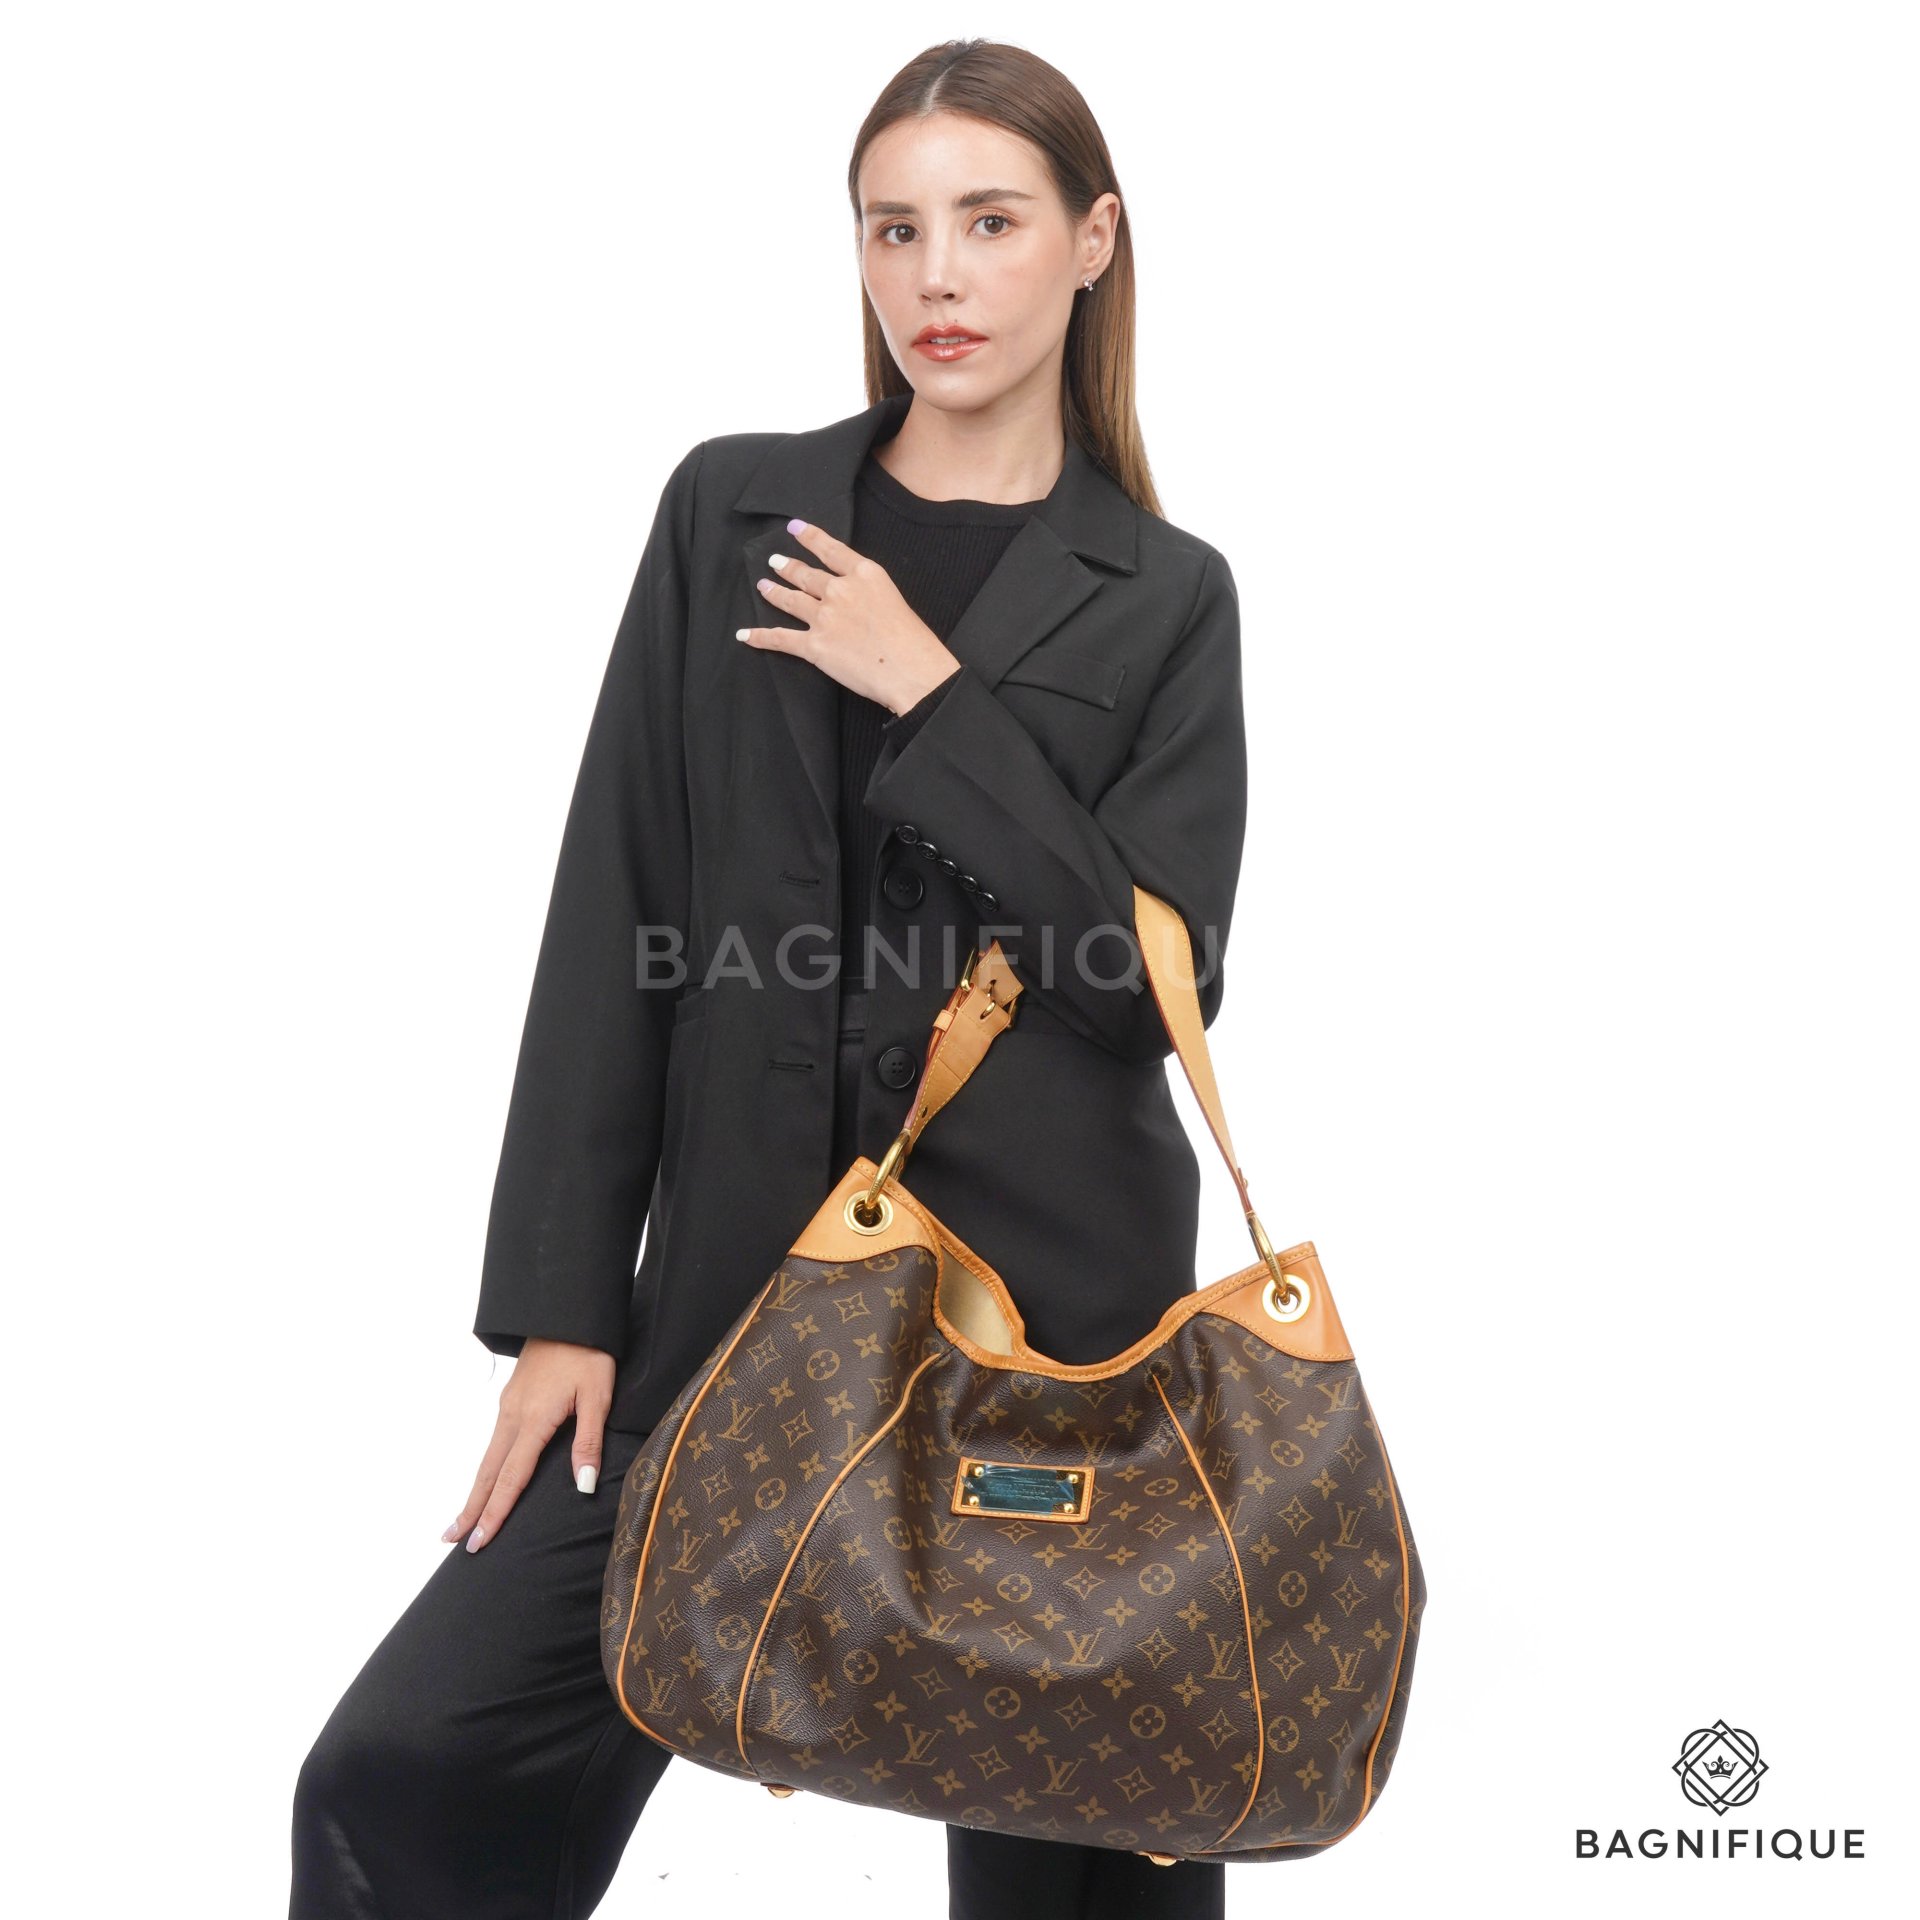 Louis Vuitton: Galliera PM Bag/Hobo